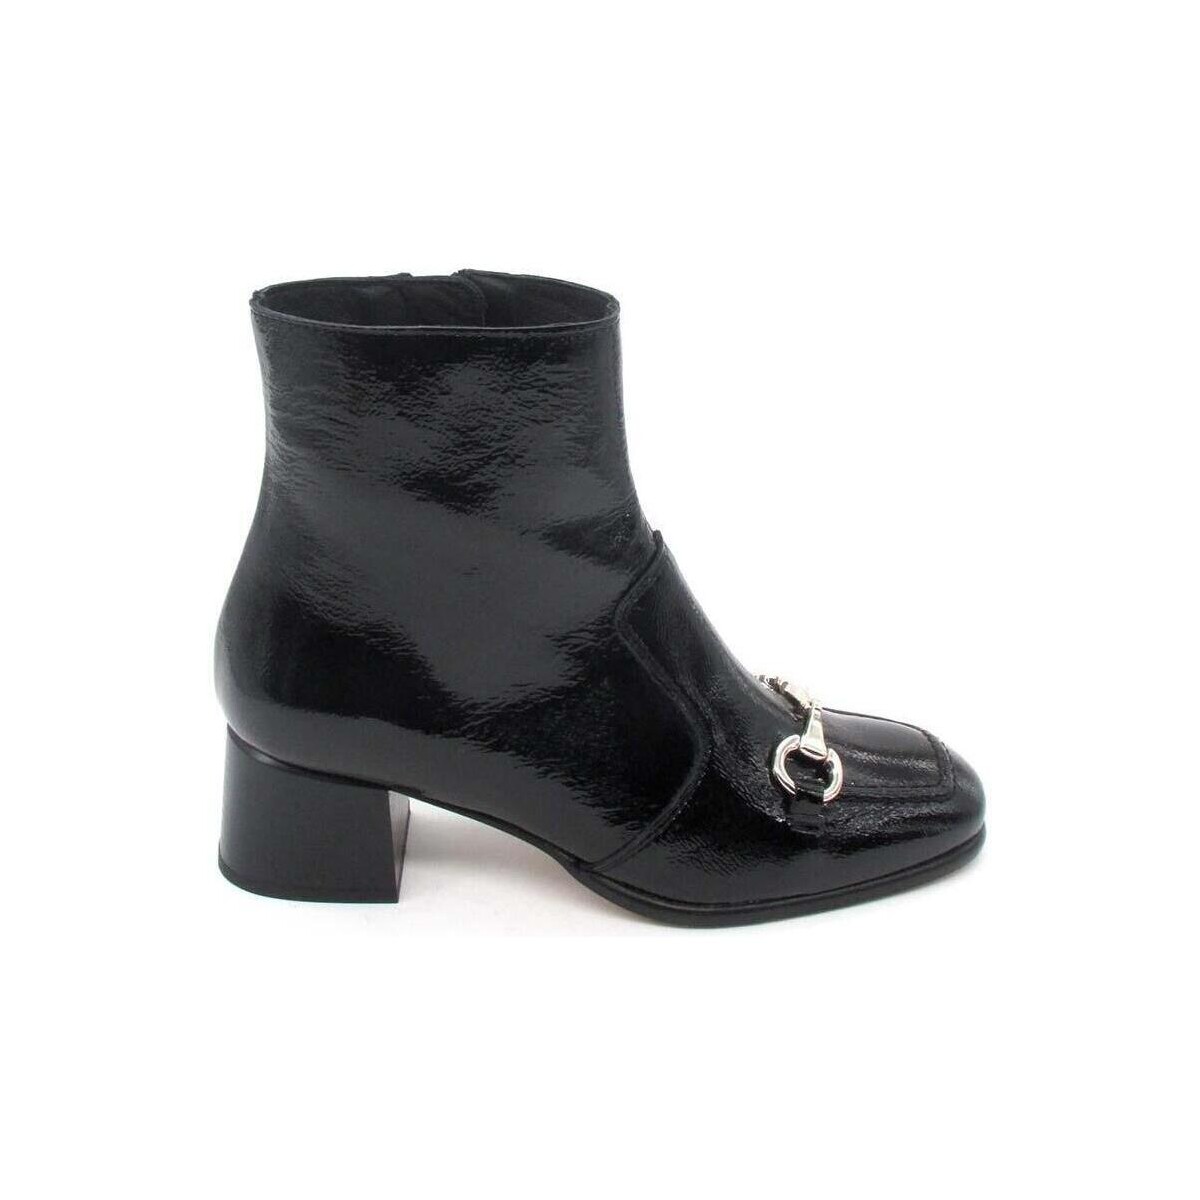 Chaussures Femme Bottines Wikers  Noir